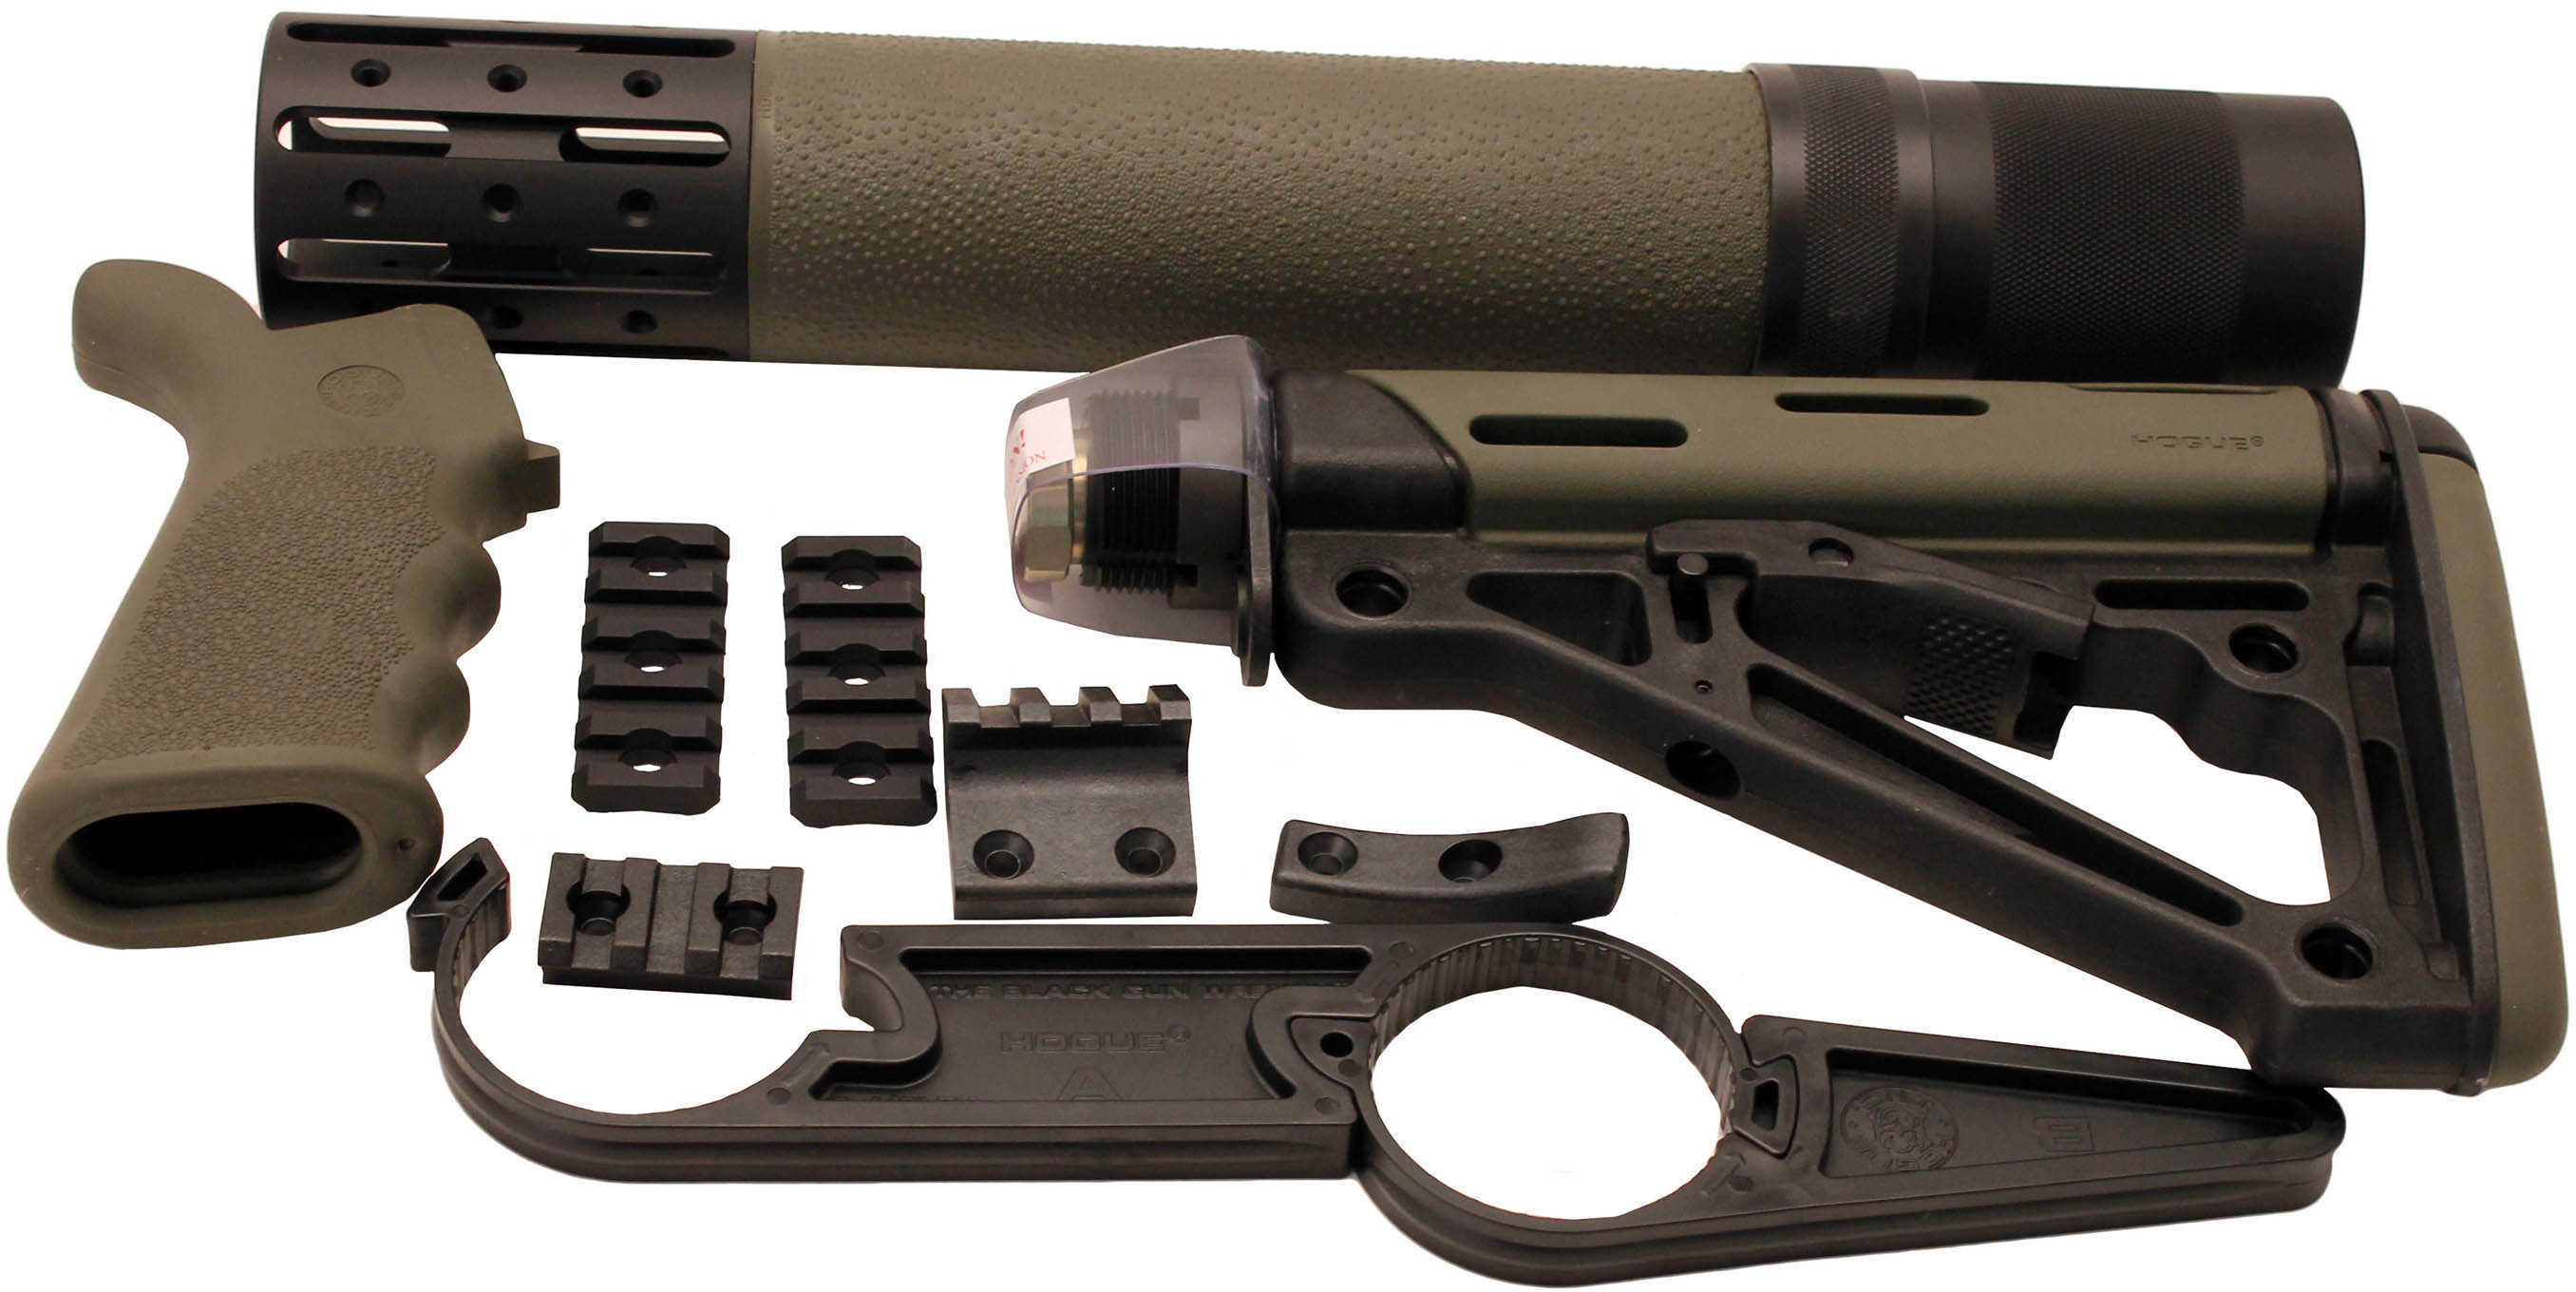 Hogue AR15 Kit BFG Grip Rail Forend Accessory OMC Olive Drab Green Md: 15278